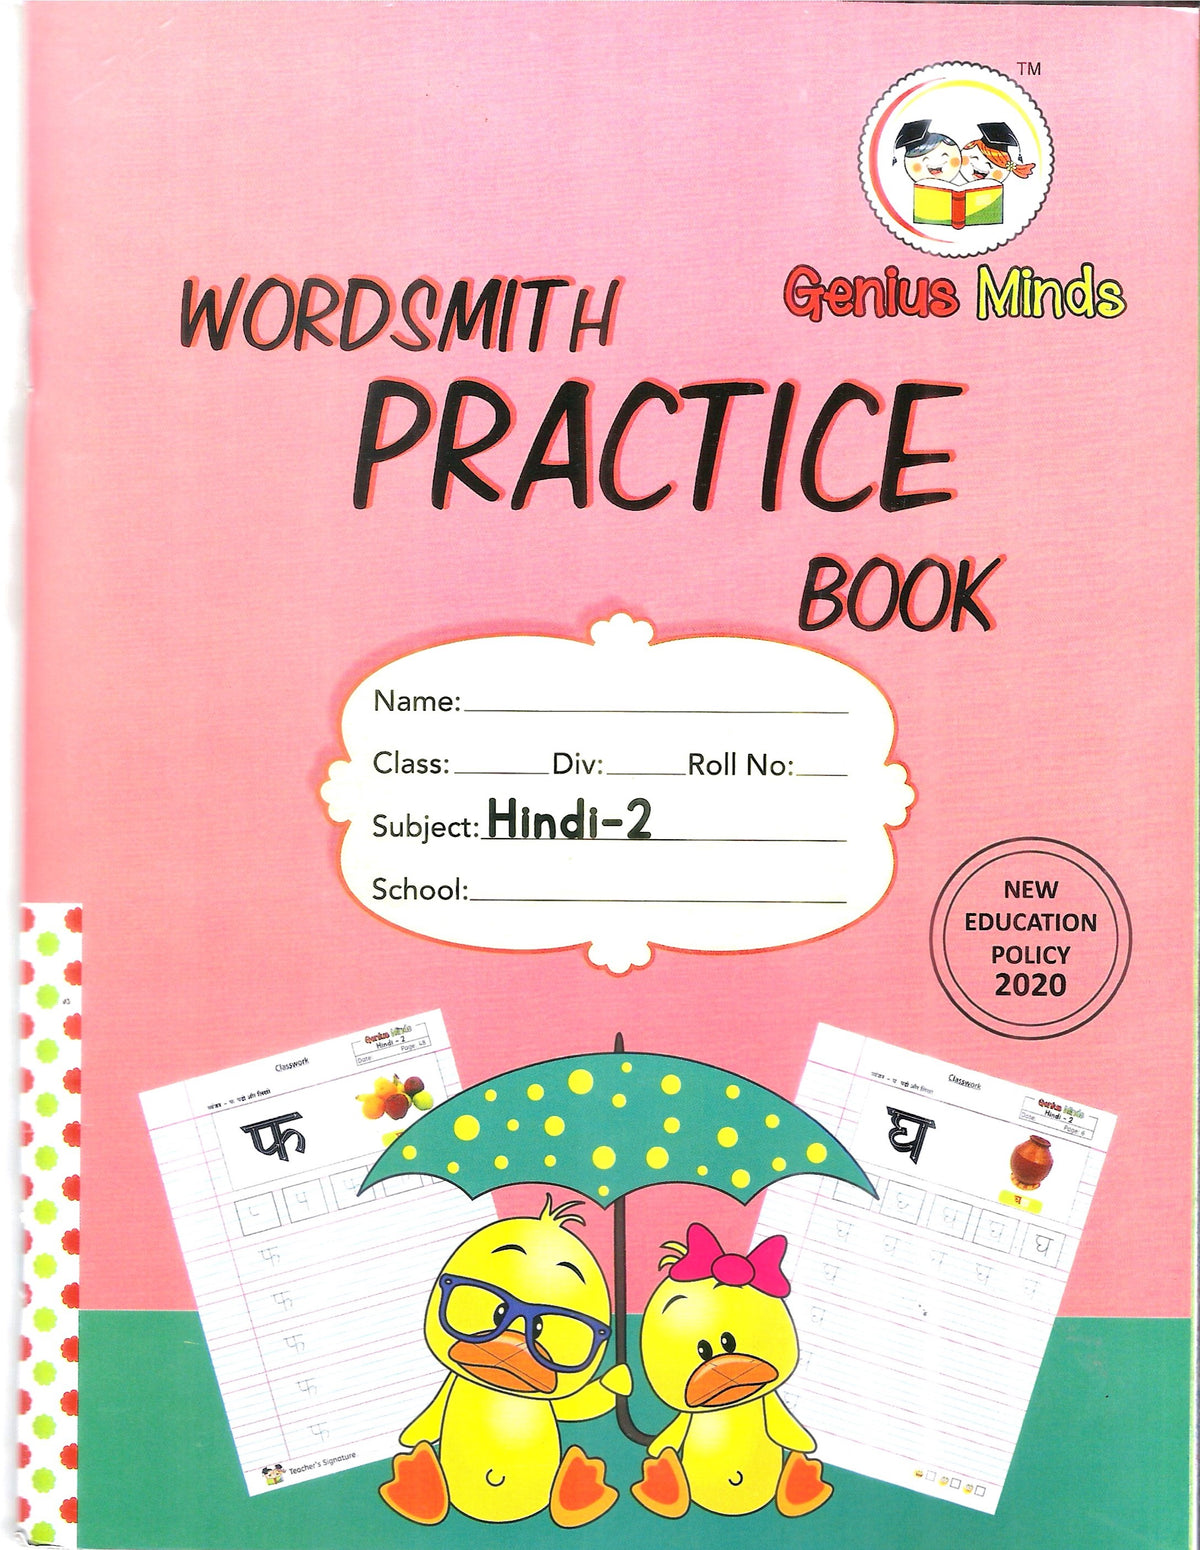 WORDSMITH PRACTICE BOOK HINDI- 2